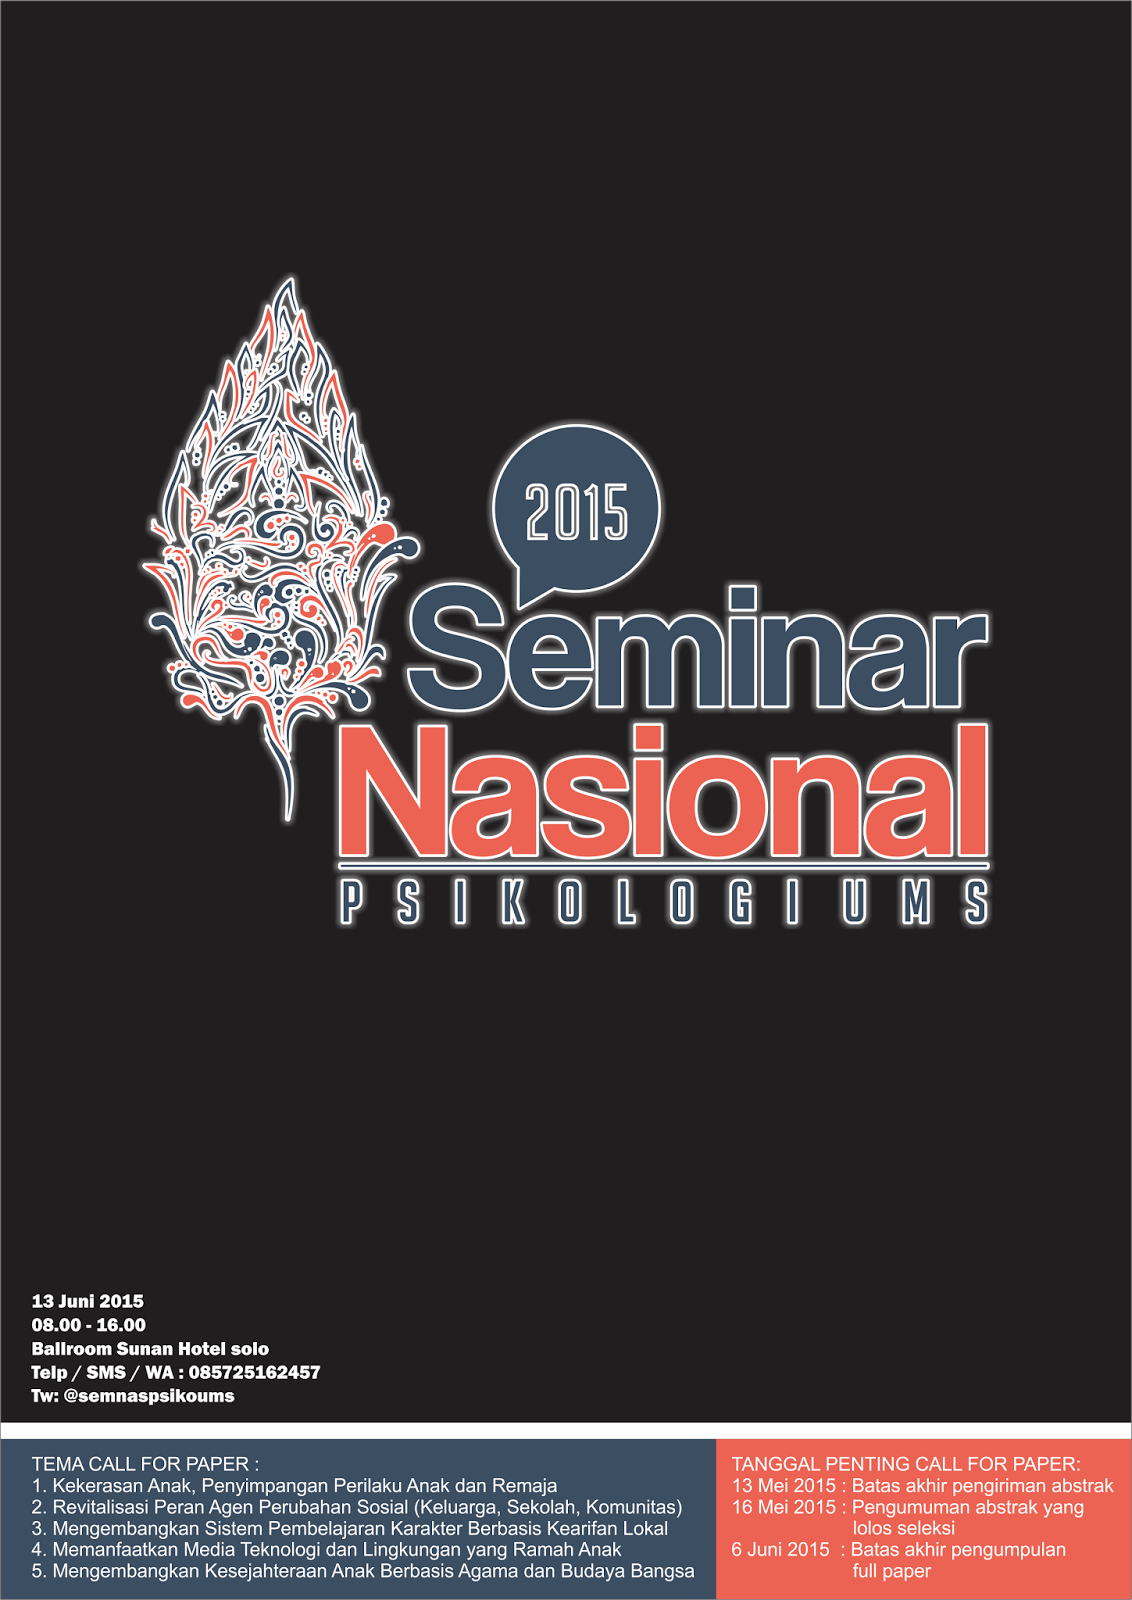 Seminar Nasional Psikologi UMS 2015